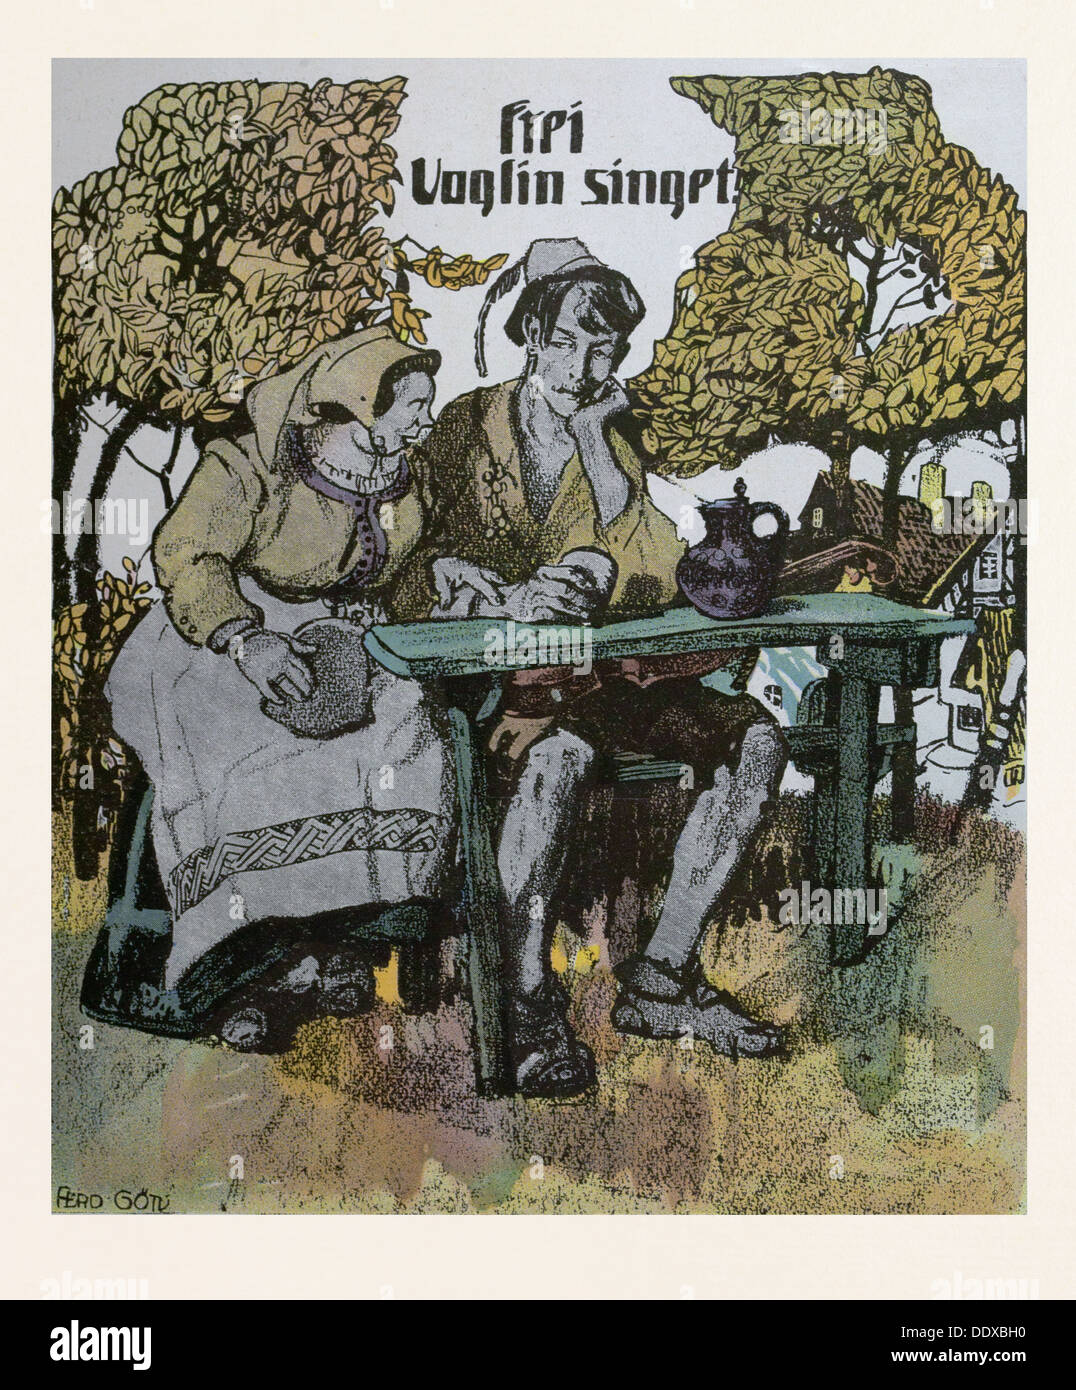 Frei voglin singet  by Ferdinand Gotz, 1874-1936, German. In the garden, drinking, man, woman, outdoors, folk dress, talking Stock Photo